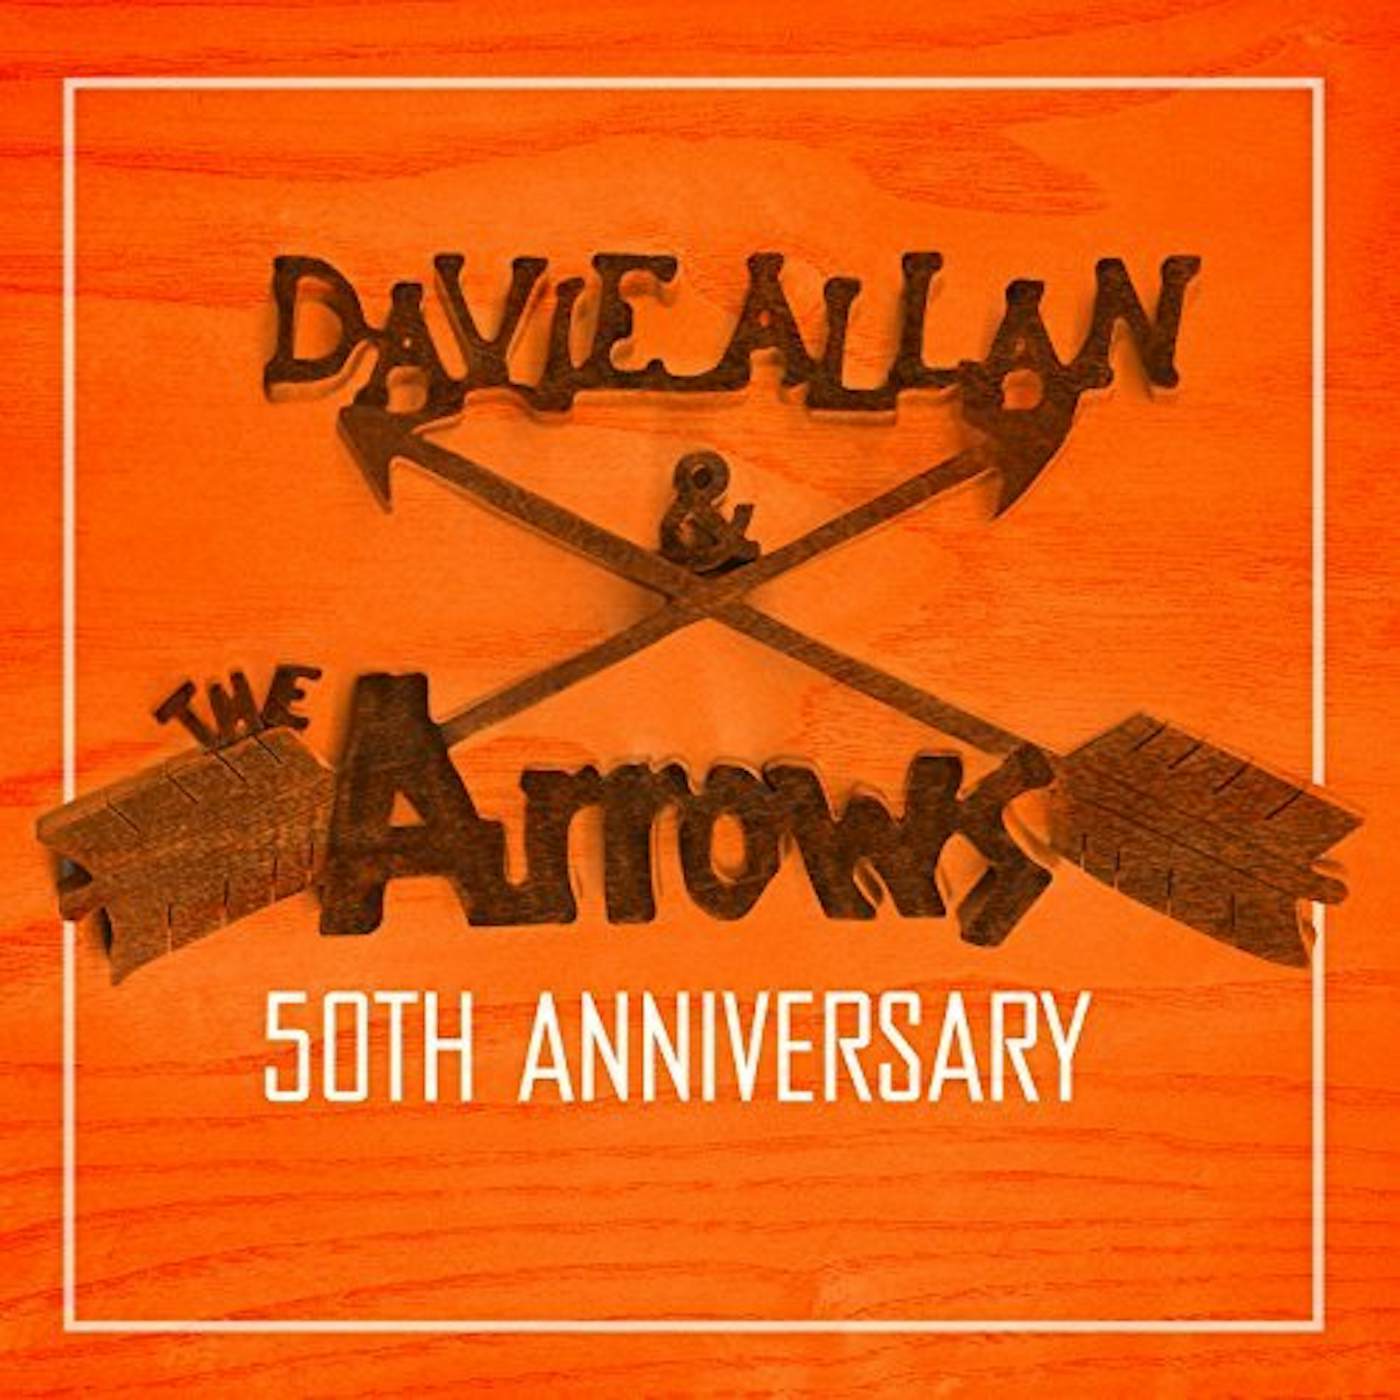 Davie Allan & The Arrows 50TH ANNIVERSARY CD